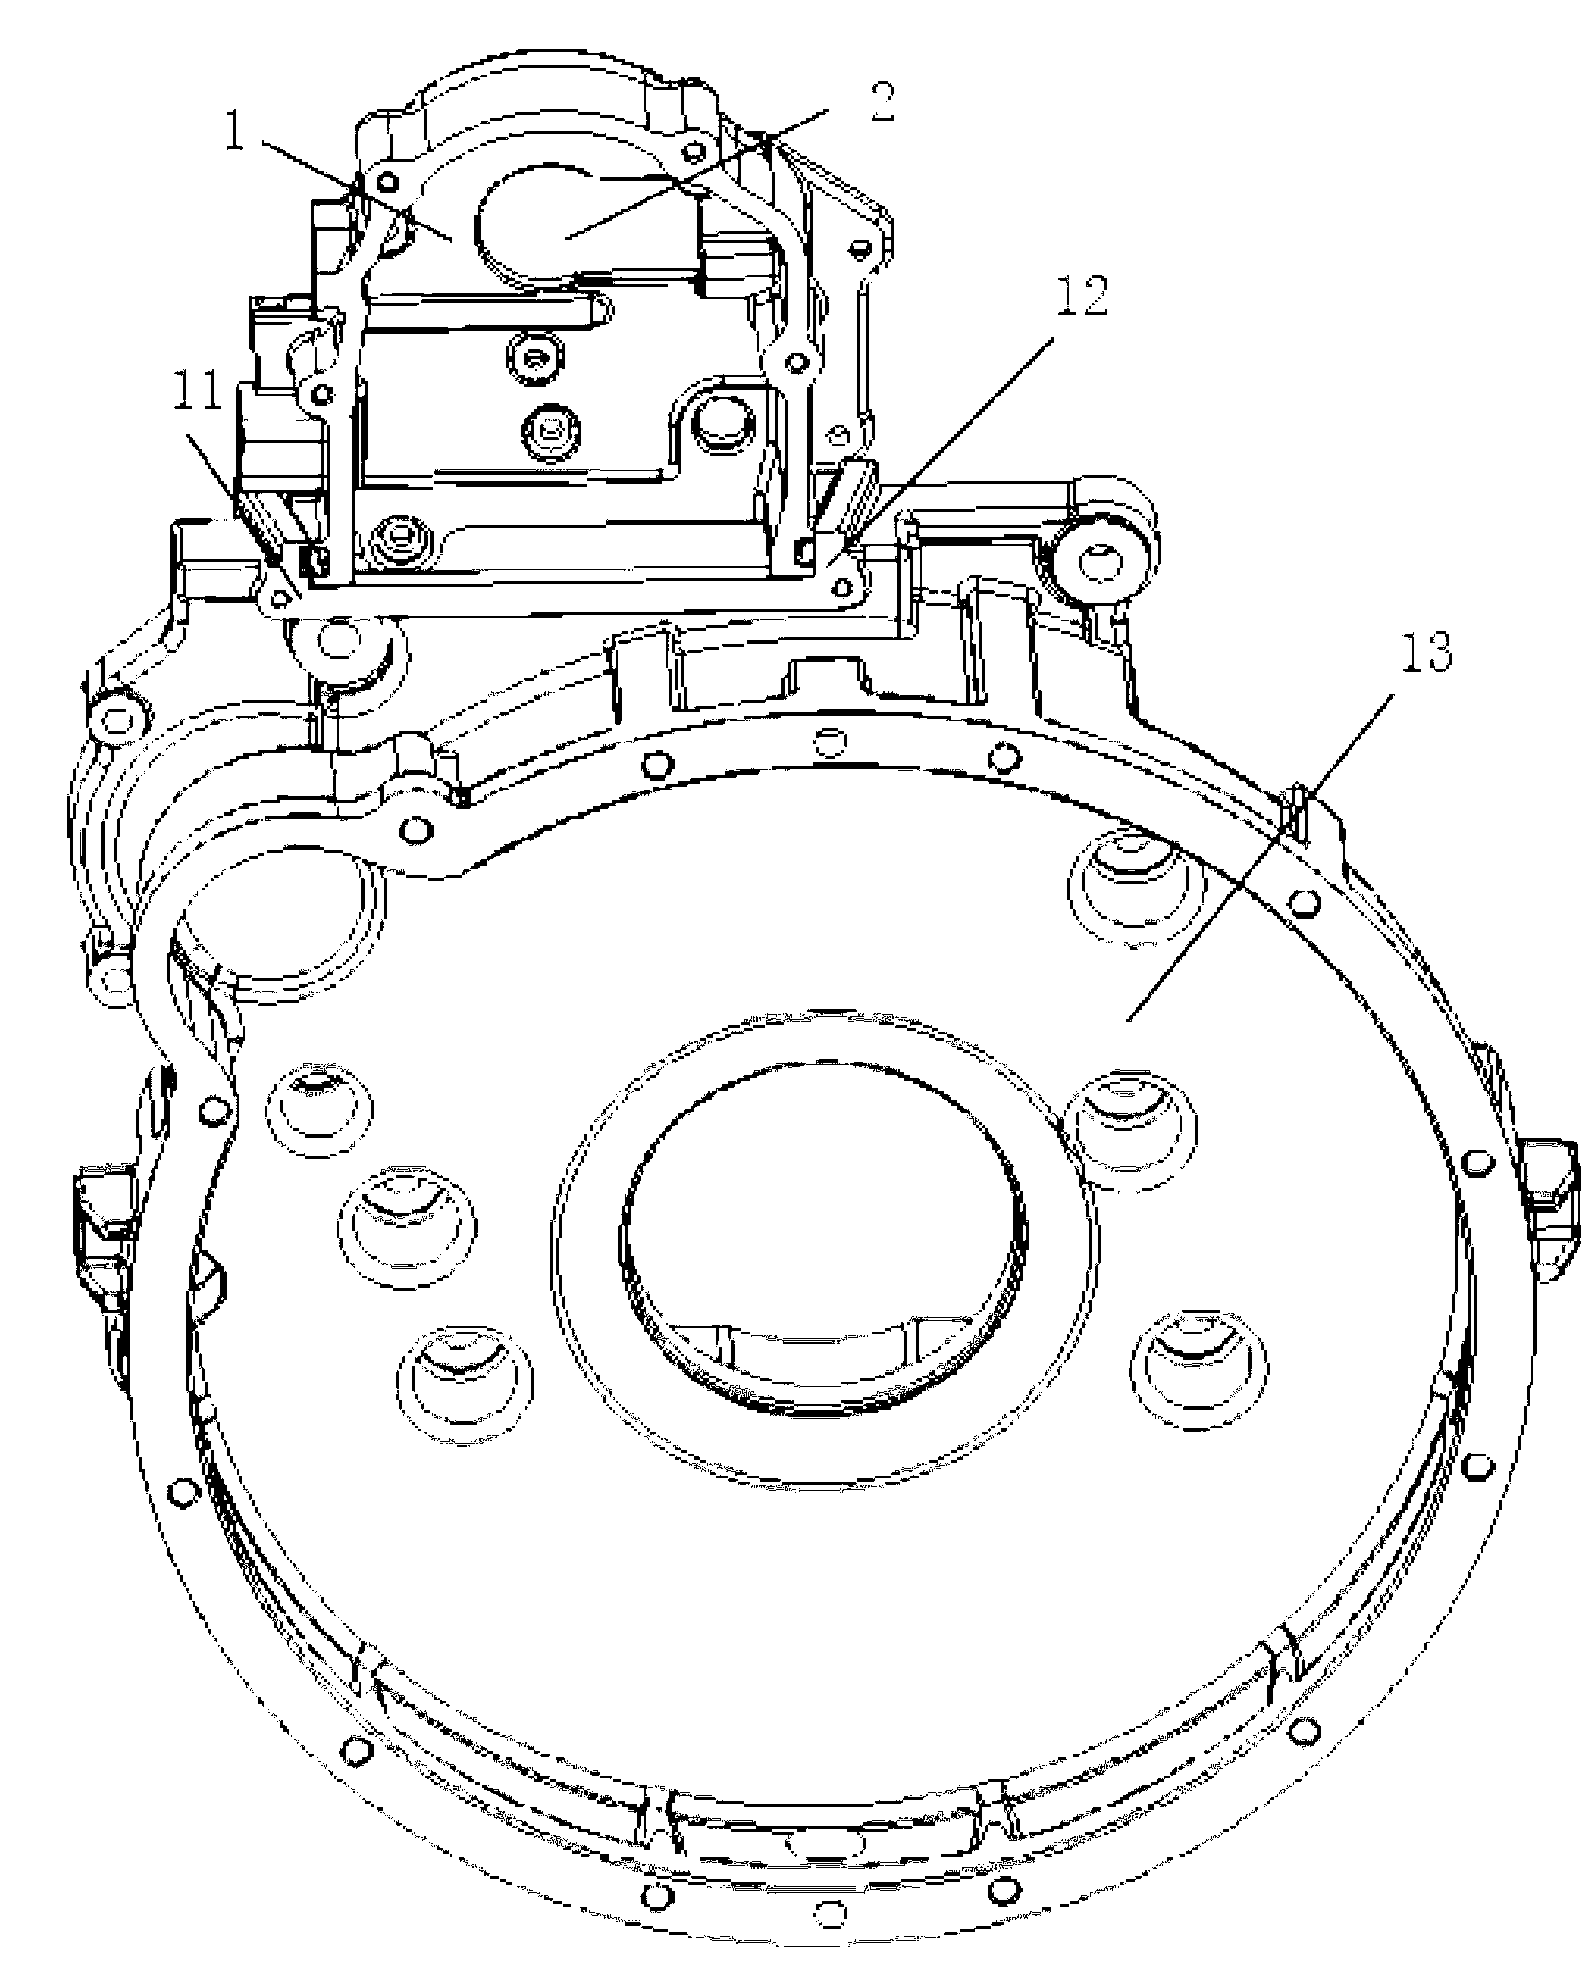 Chain wheel chamber casing of engine